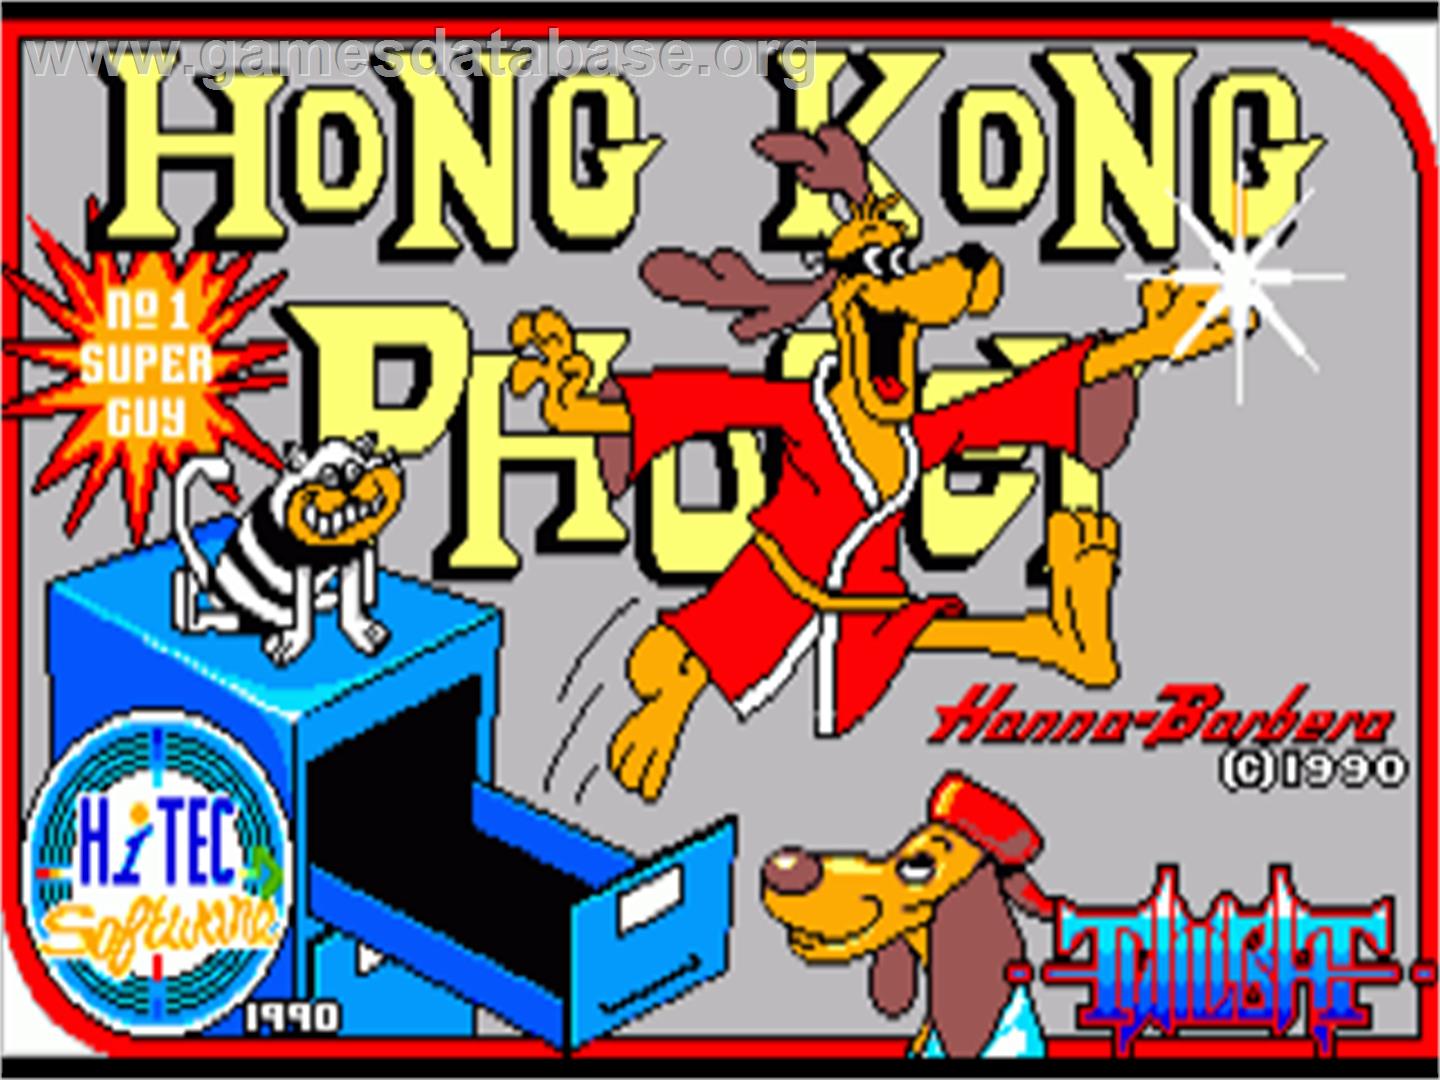 Hong Kong Phooey: No.1 Super Guy - Commodore Amiga - Artwork - Title Screen